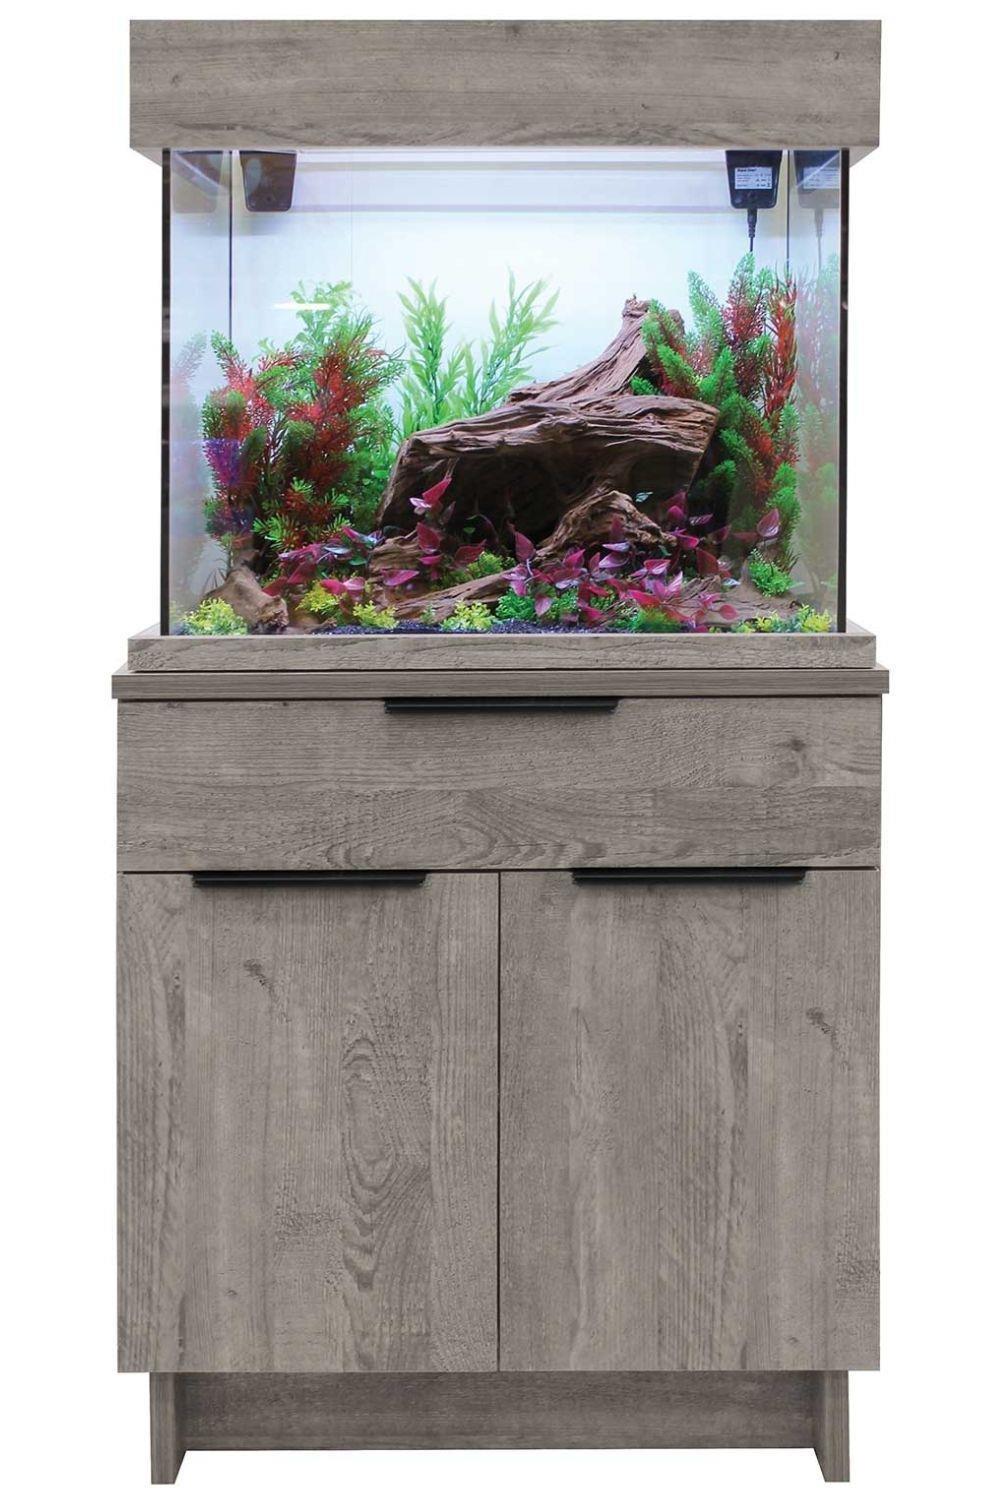 OakStyle 110L Aquarium and Urban Grey Cabinet